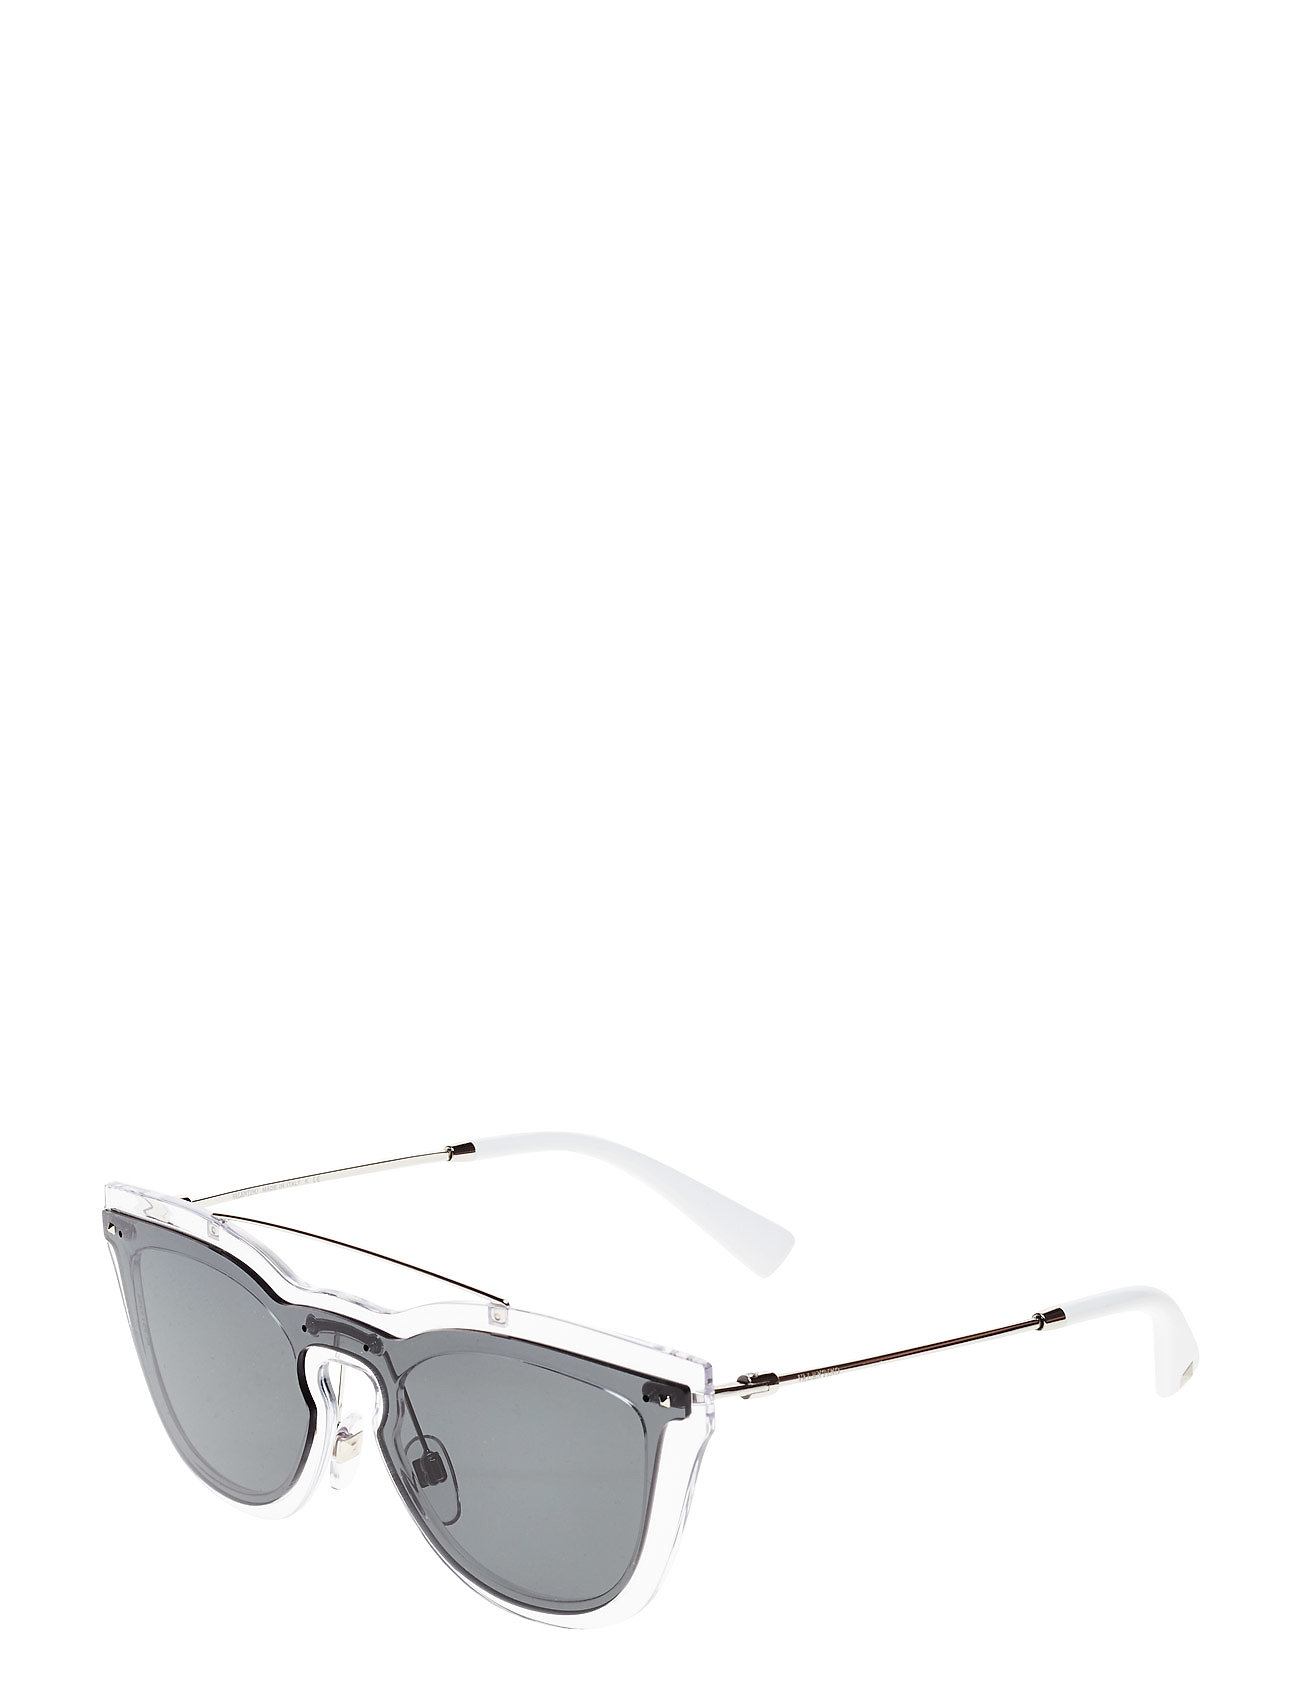 Glamgloss Wayfarer Solbriller Creme Valentino Sunglasses